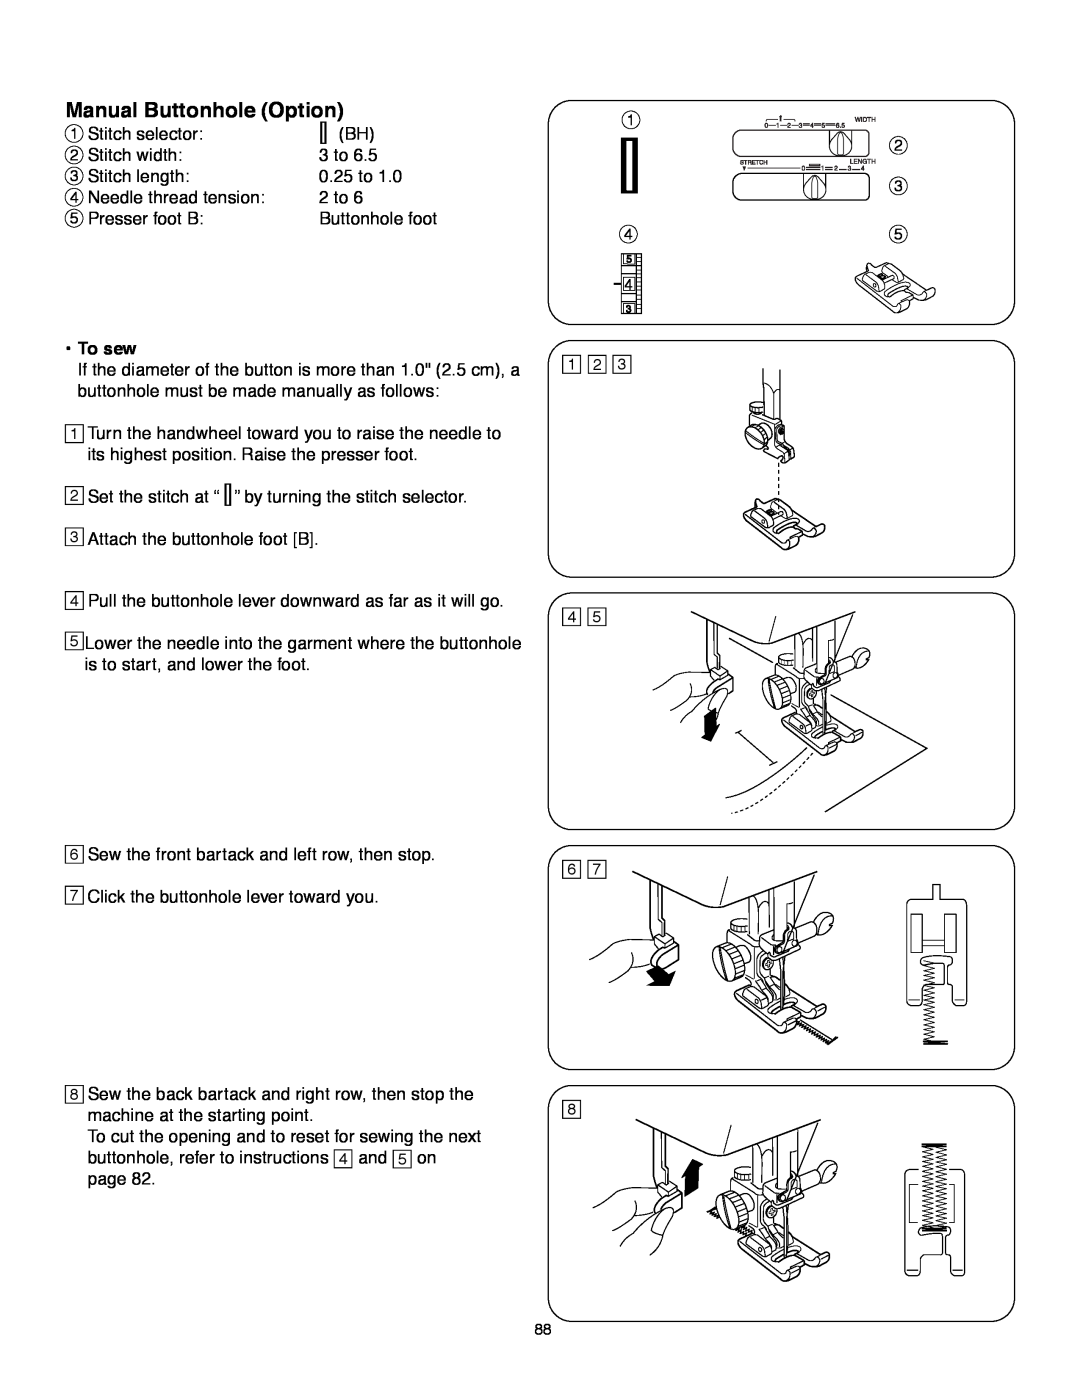 Janome MS-5027 instruction manual Manual Buttonhole Option, To sew 